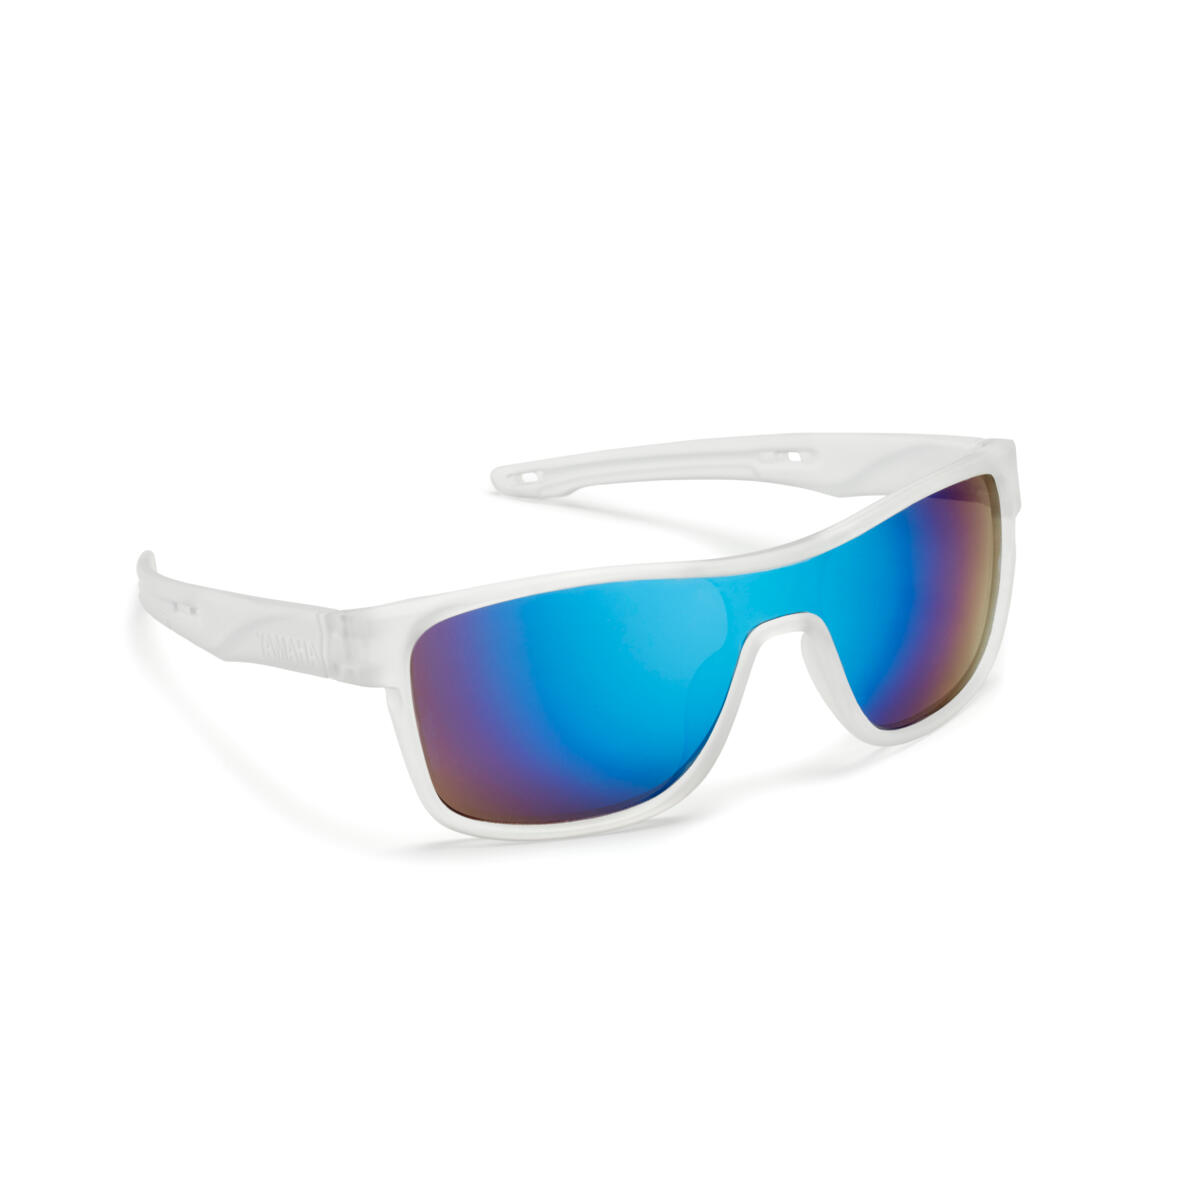 https://www.whateverwheels.co.uk/smsimg/149/41927-70628-full-n20-jj105-w1-00-sunglasses-yamaha-racing-eu-studio-002_tablet-149.jpg